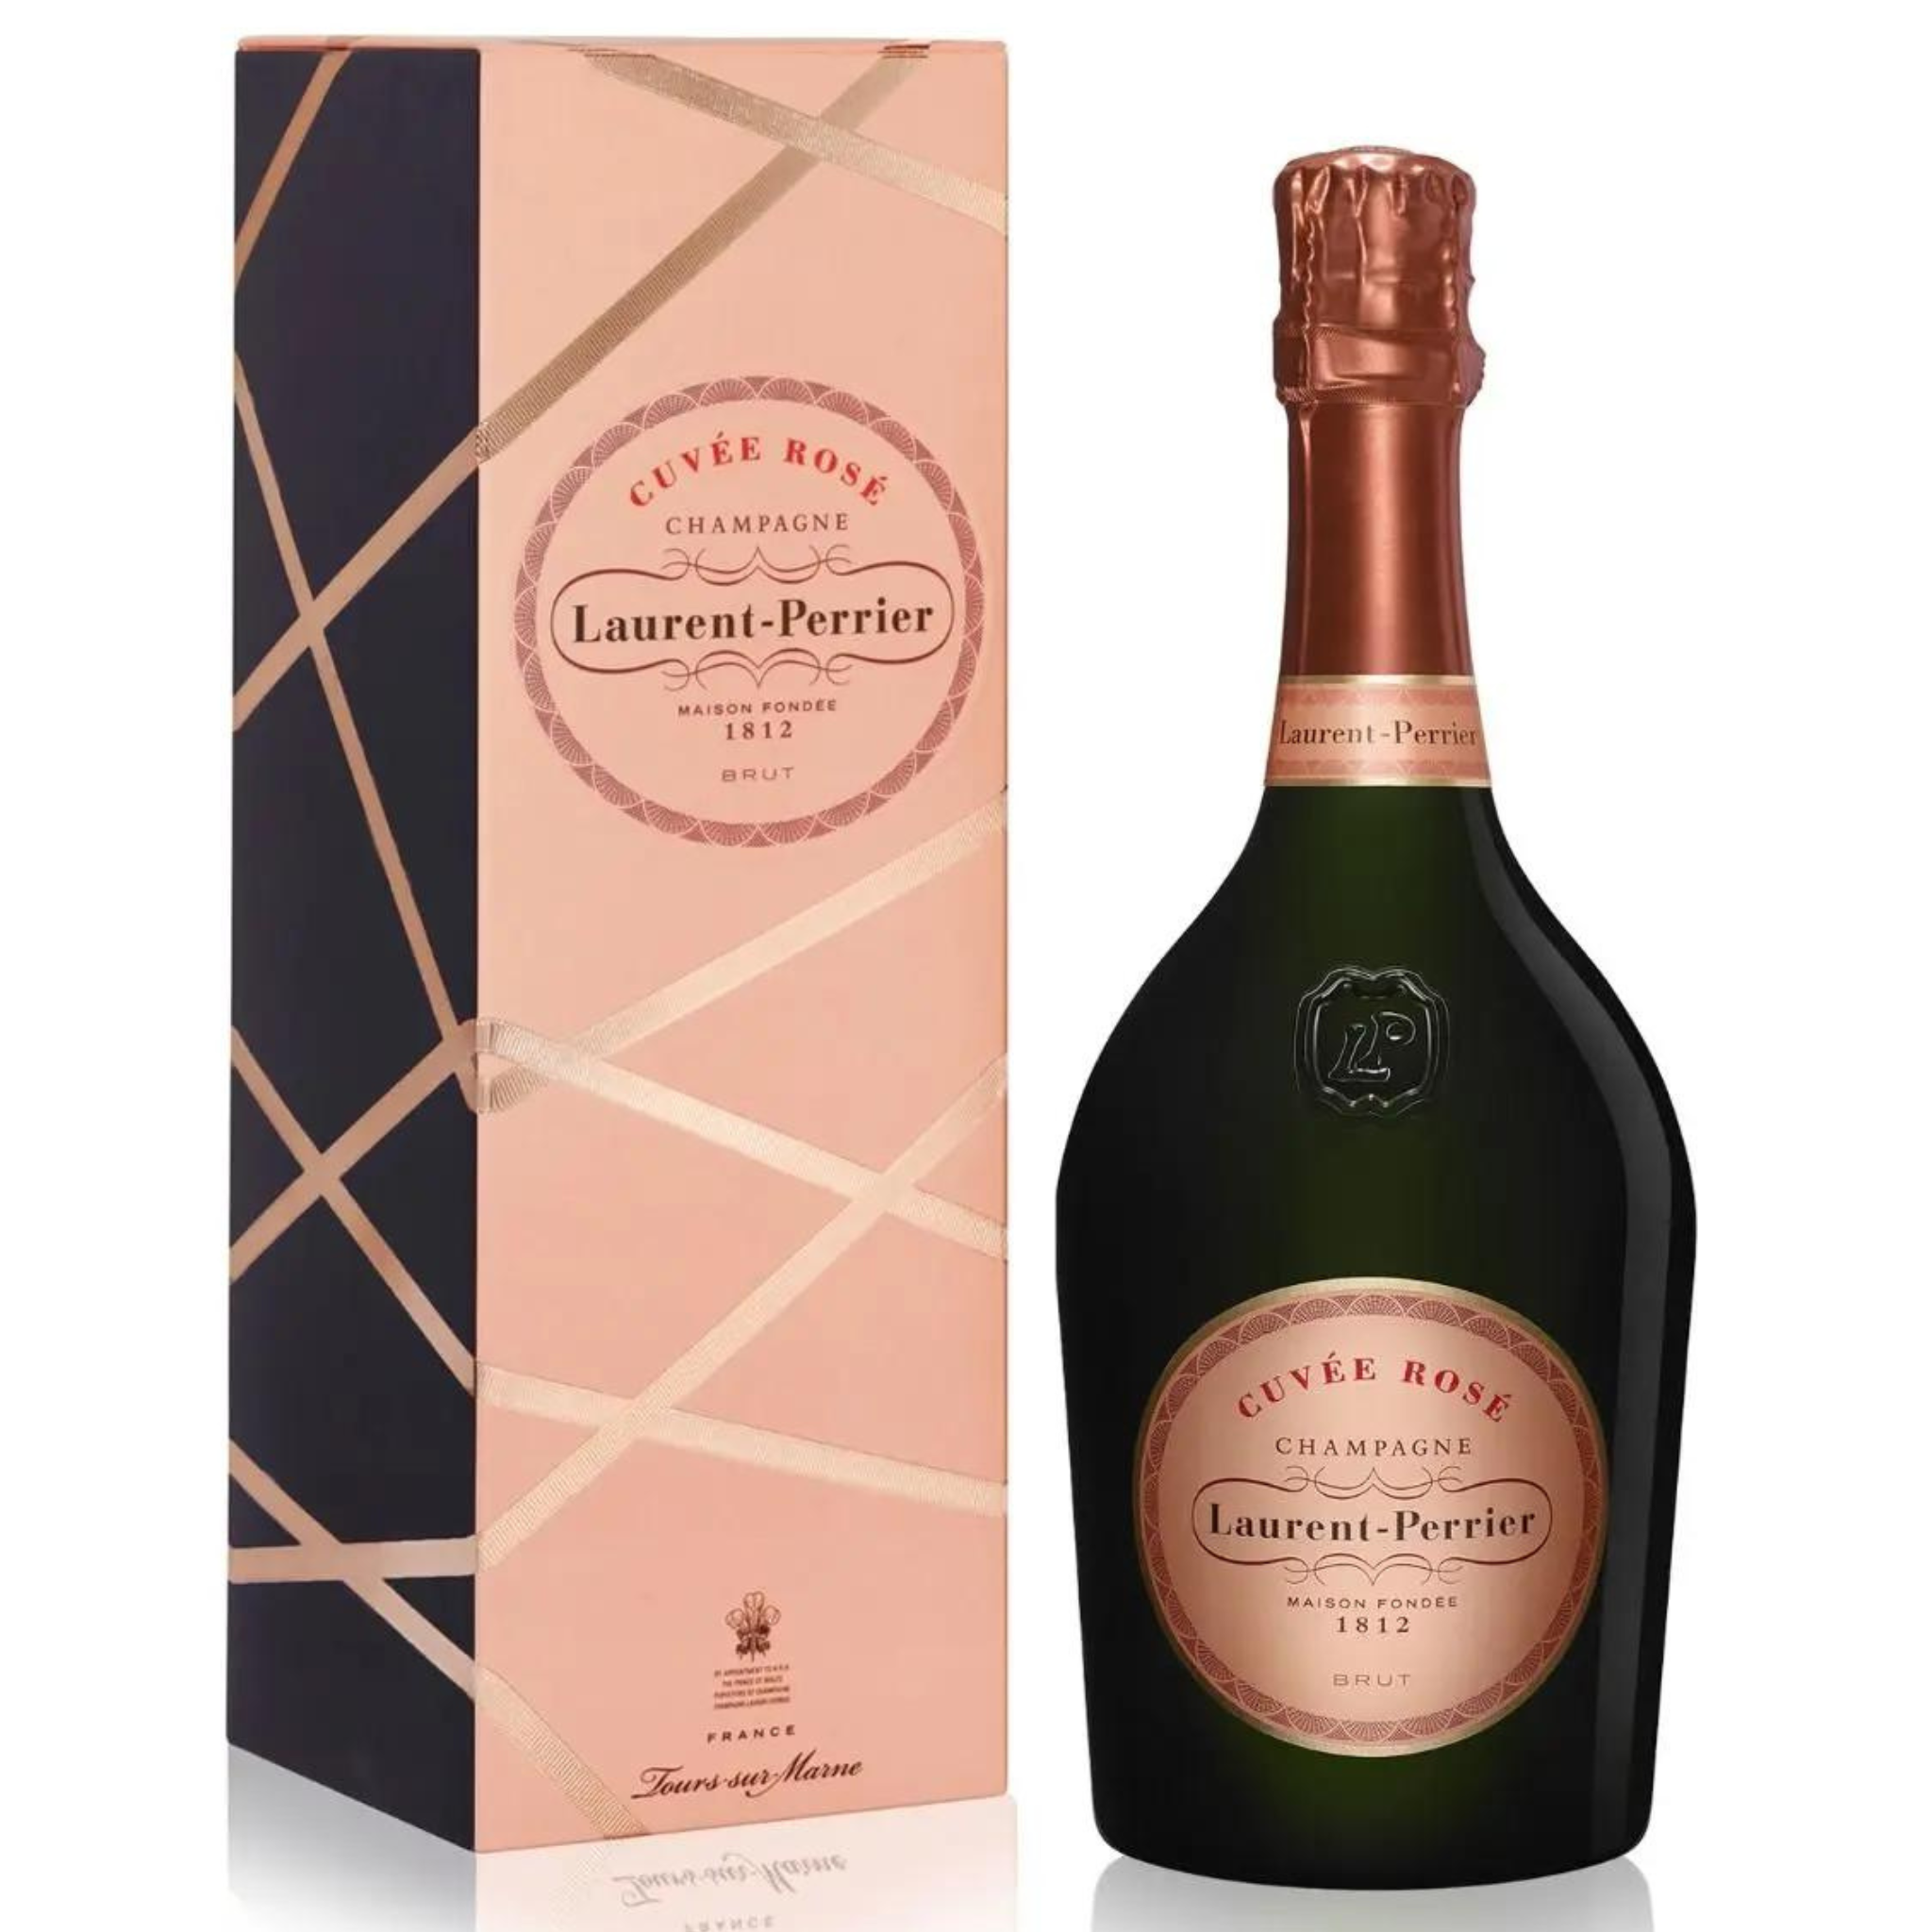 Champagne & Roses Gift Set